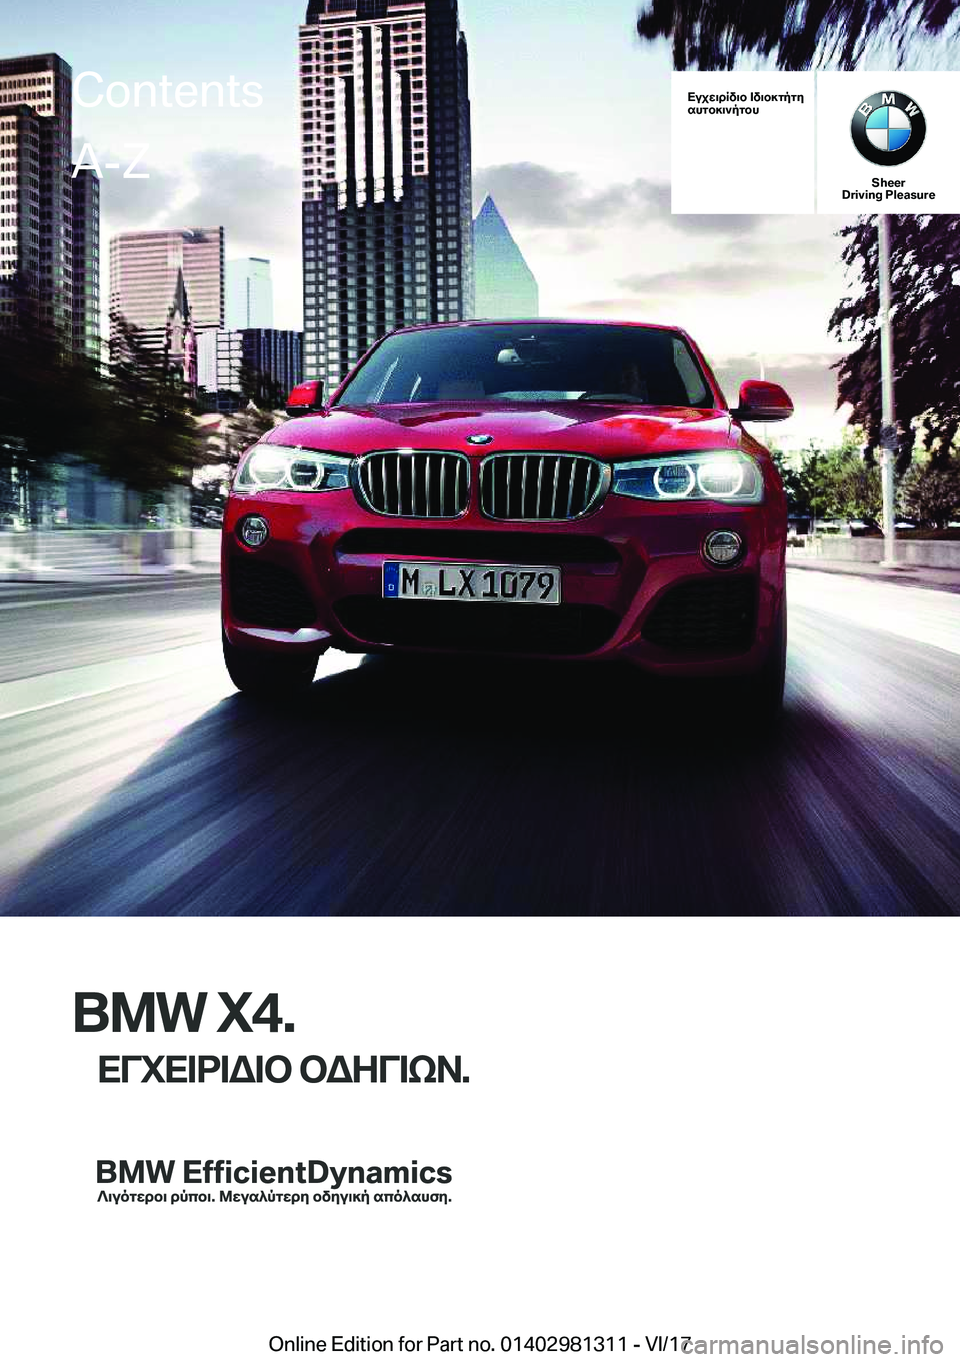 BMW X4 2018  ΟΔΗΓΌΣ ΧΡΉΣΗΣ (in Greek) Xujw\dRv\b�=v\b]gpgy
shgb]\`pgbh
�S�h�e�e�r
�D�r�i�v�i�n�g��P�l�e�a�s�u�r�e
�B�M�W��X�4�.
XViX=d=W=b�bW;V=kA�.
�C�o�n�t�e�n�t�s�A�-�Z
�O�n�l�i�n�e� �